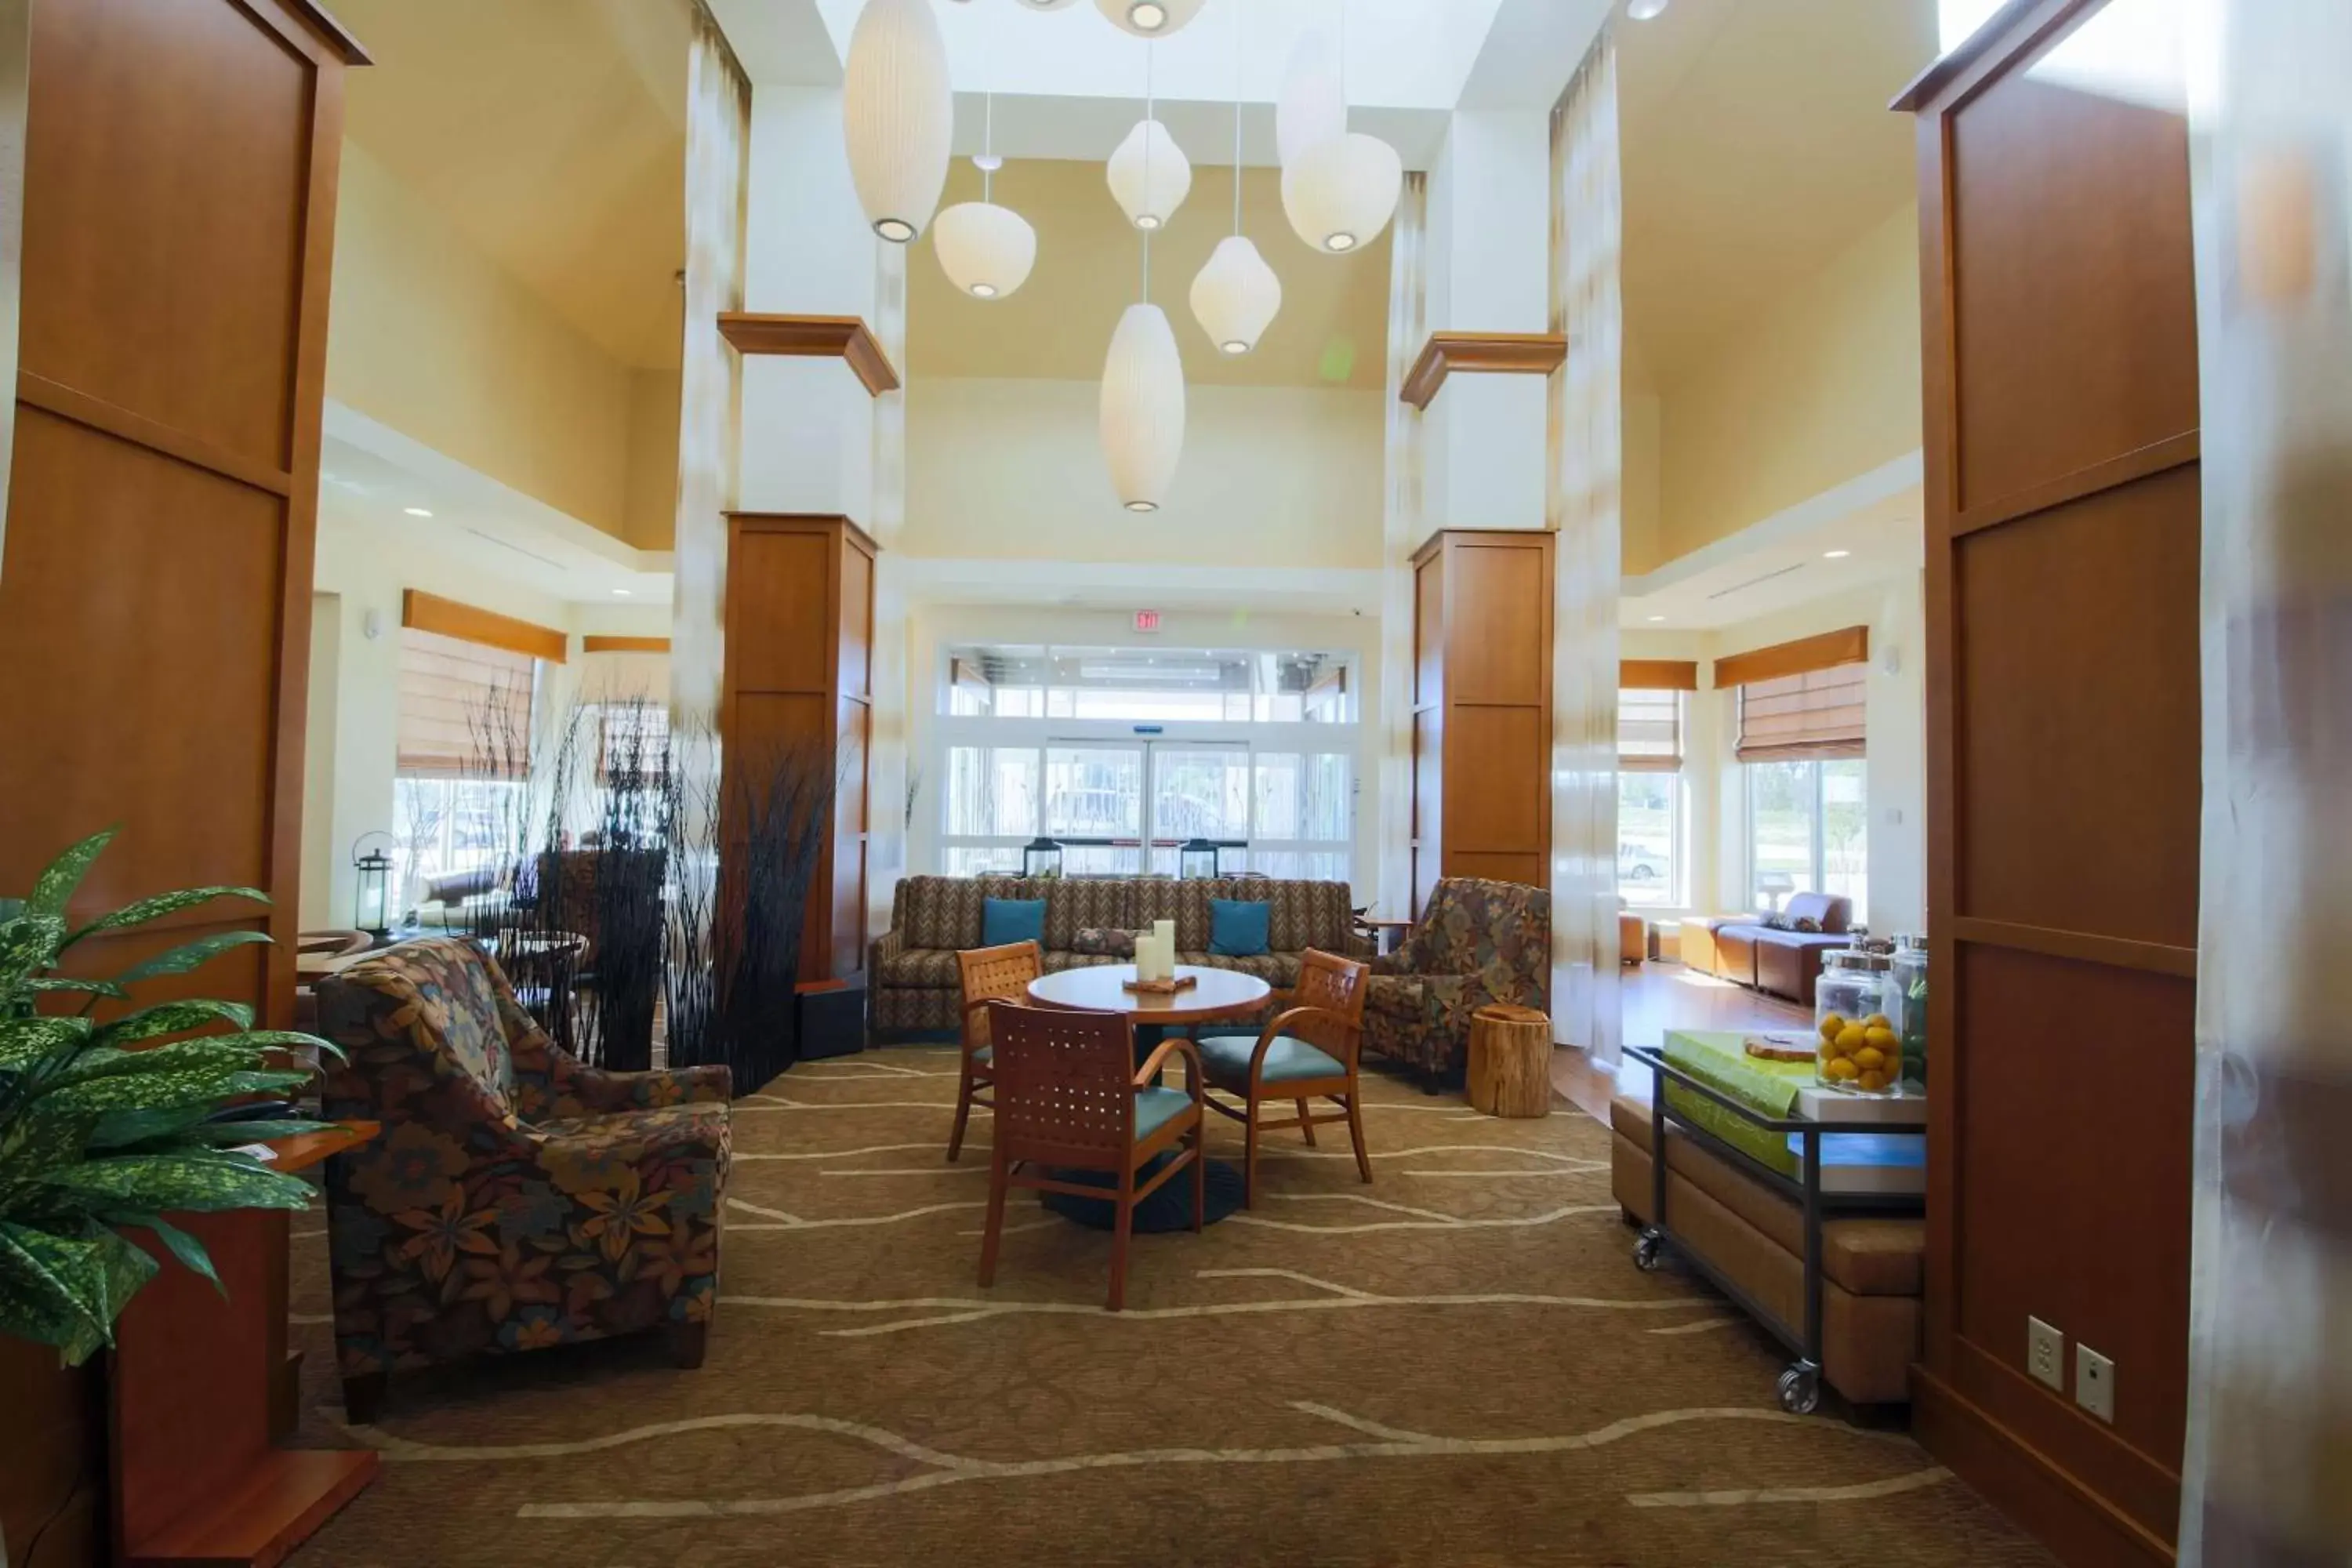 Lobby or reception in Hilton Garden Inn Cedar Falls Conference Center